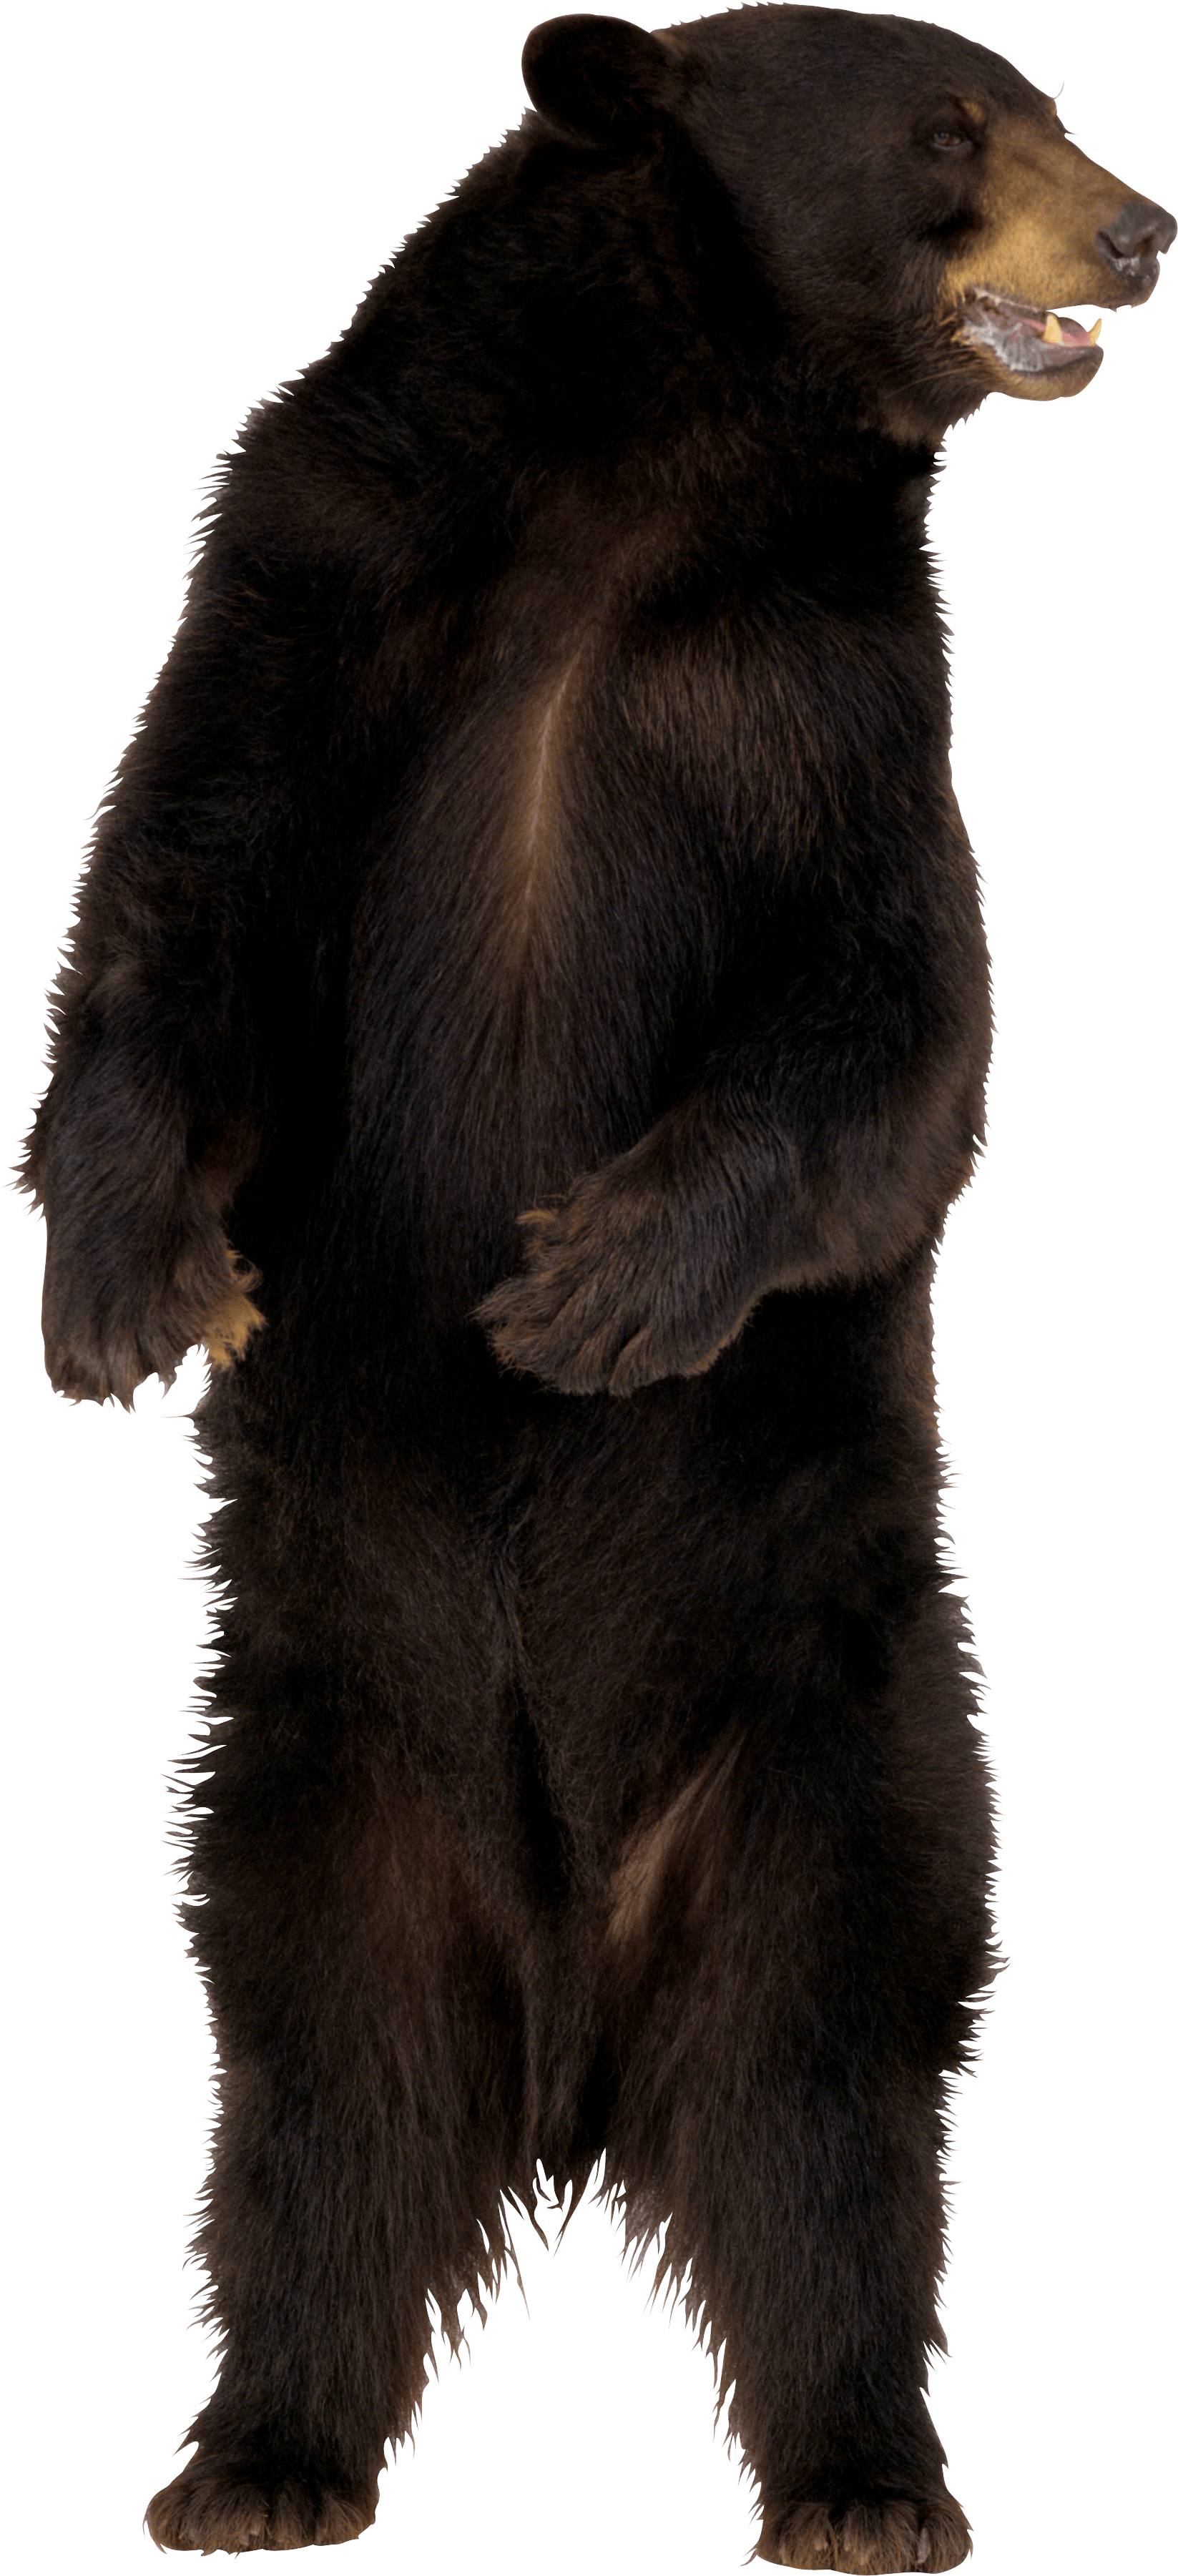 Sloth Bear Transparent Background